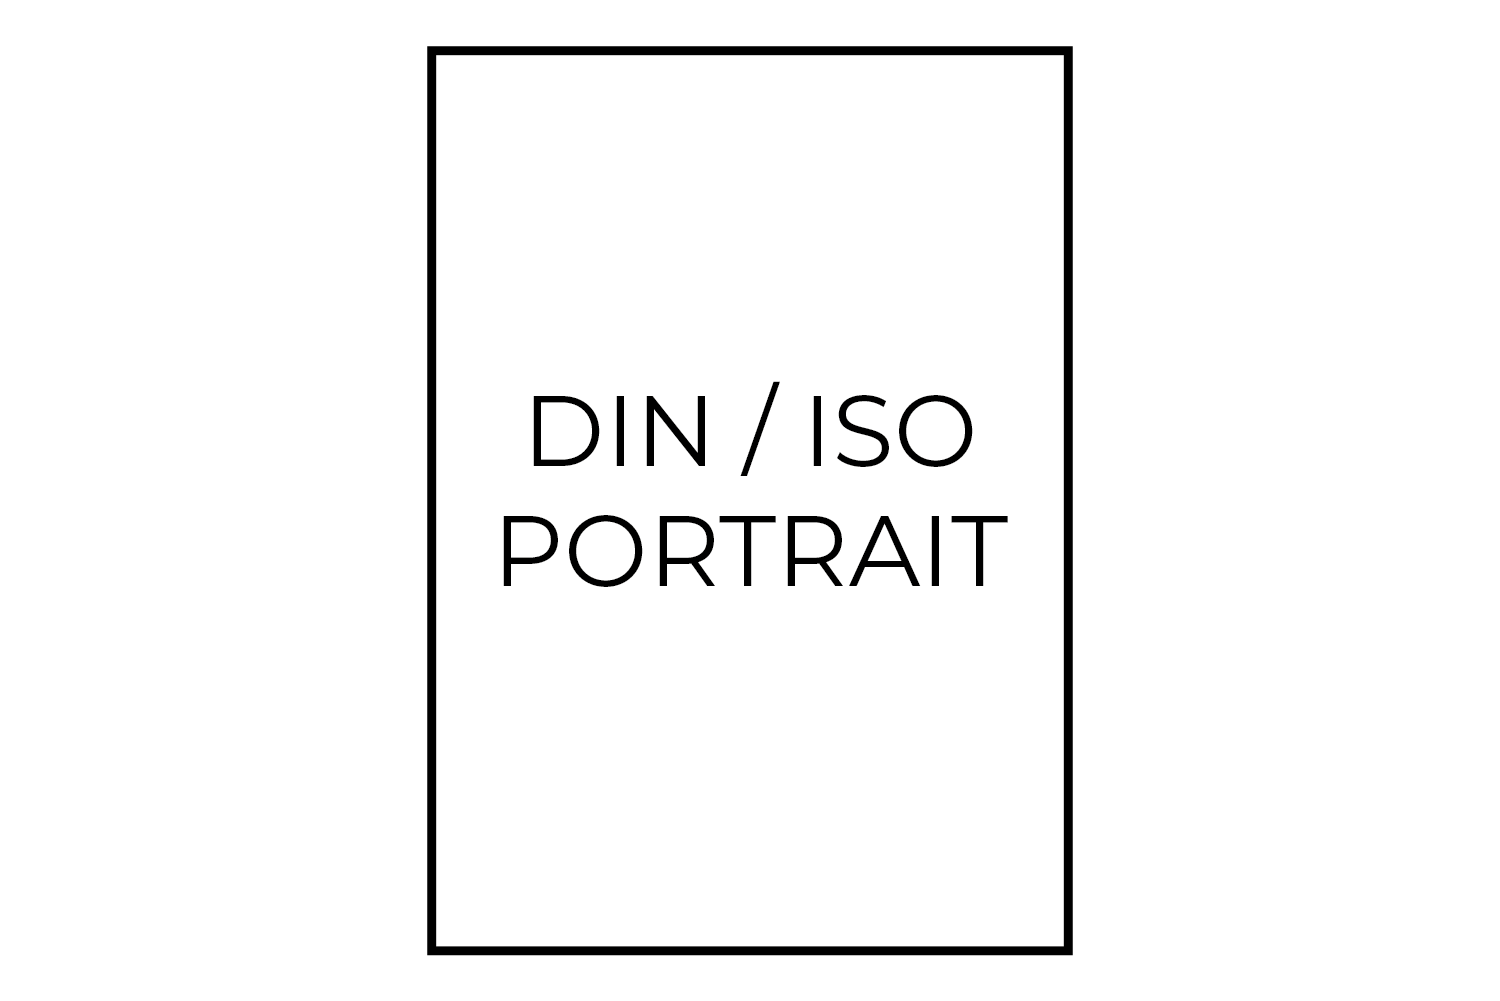 HD Metal Prints Portrait DIN / ISO Ratio